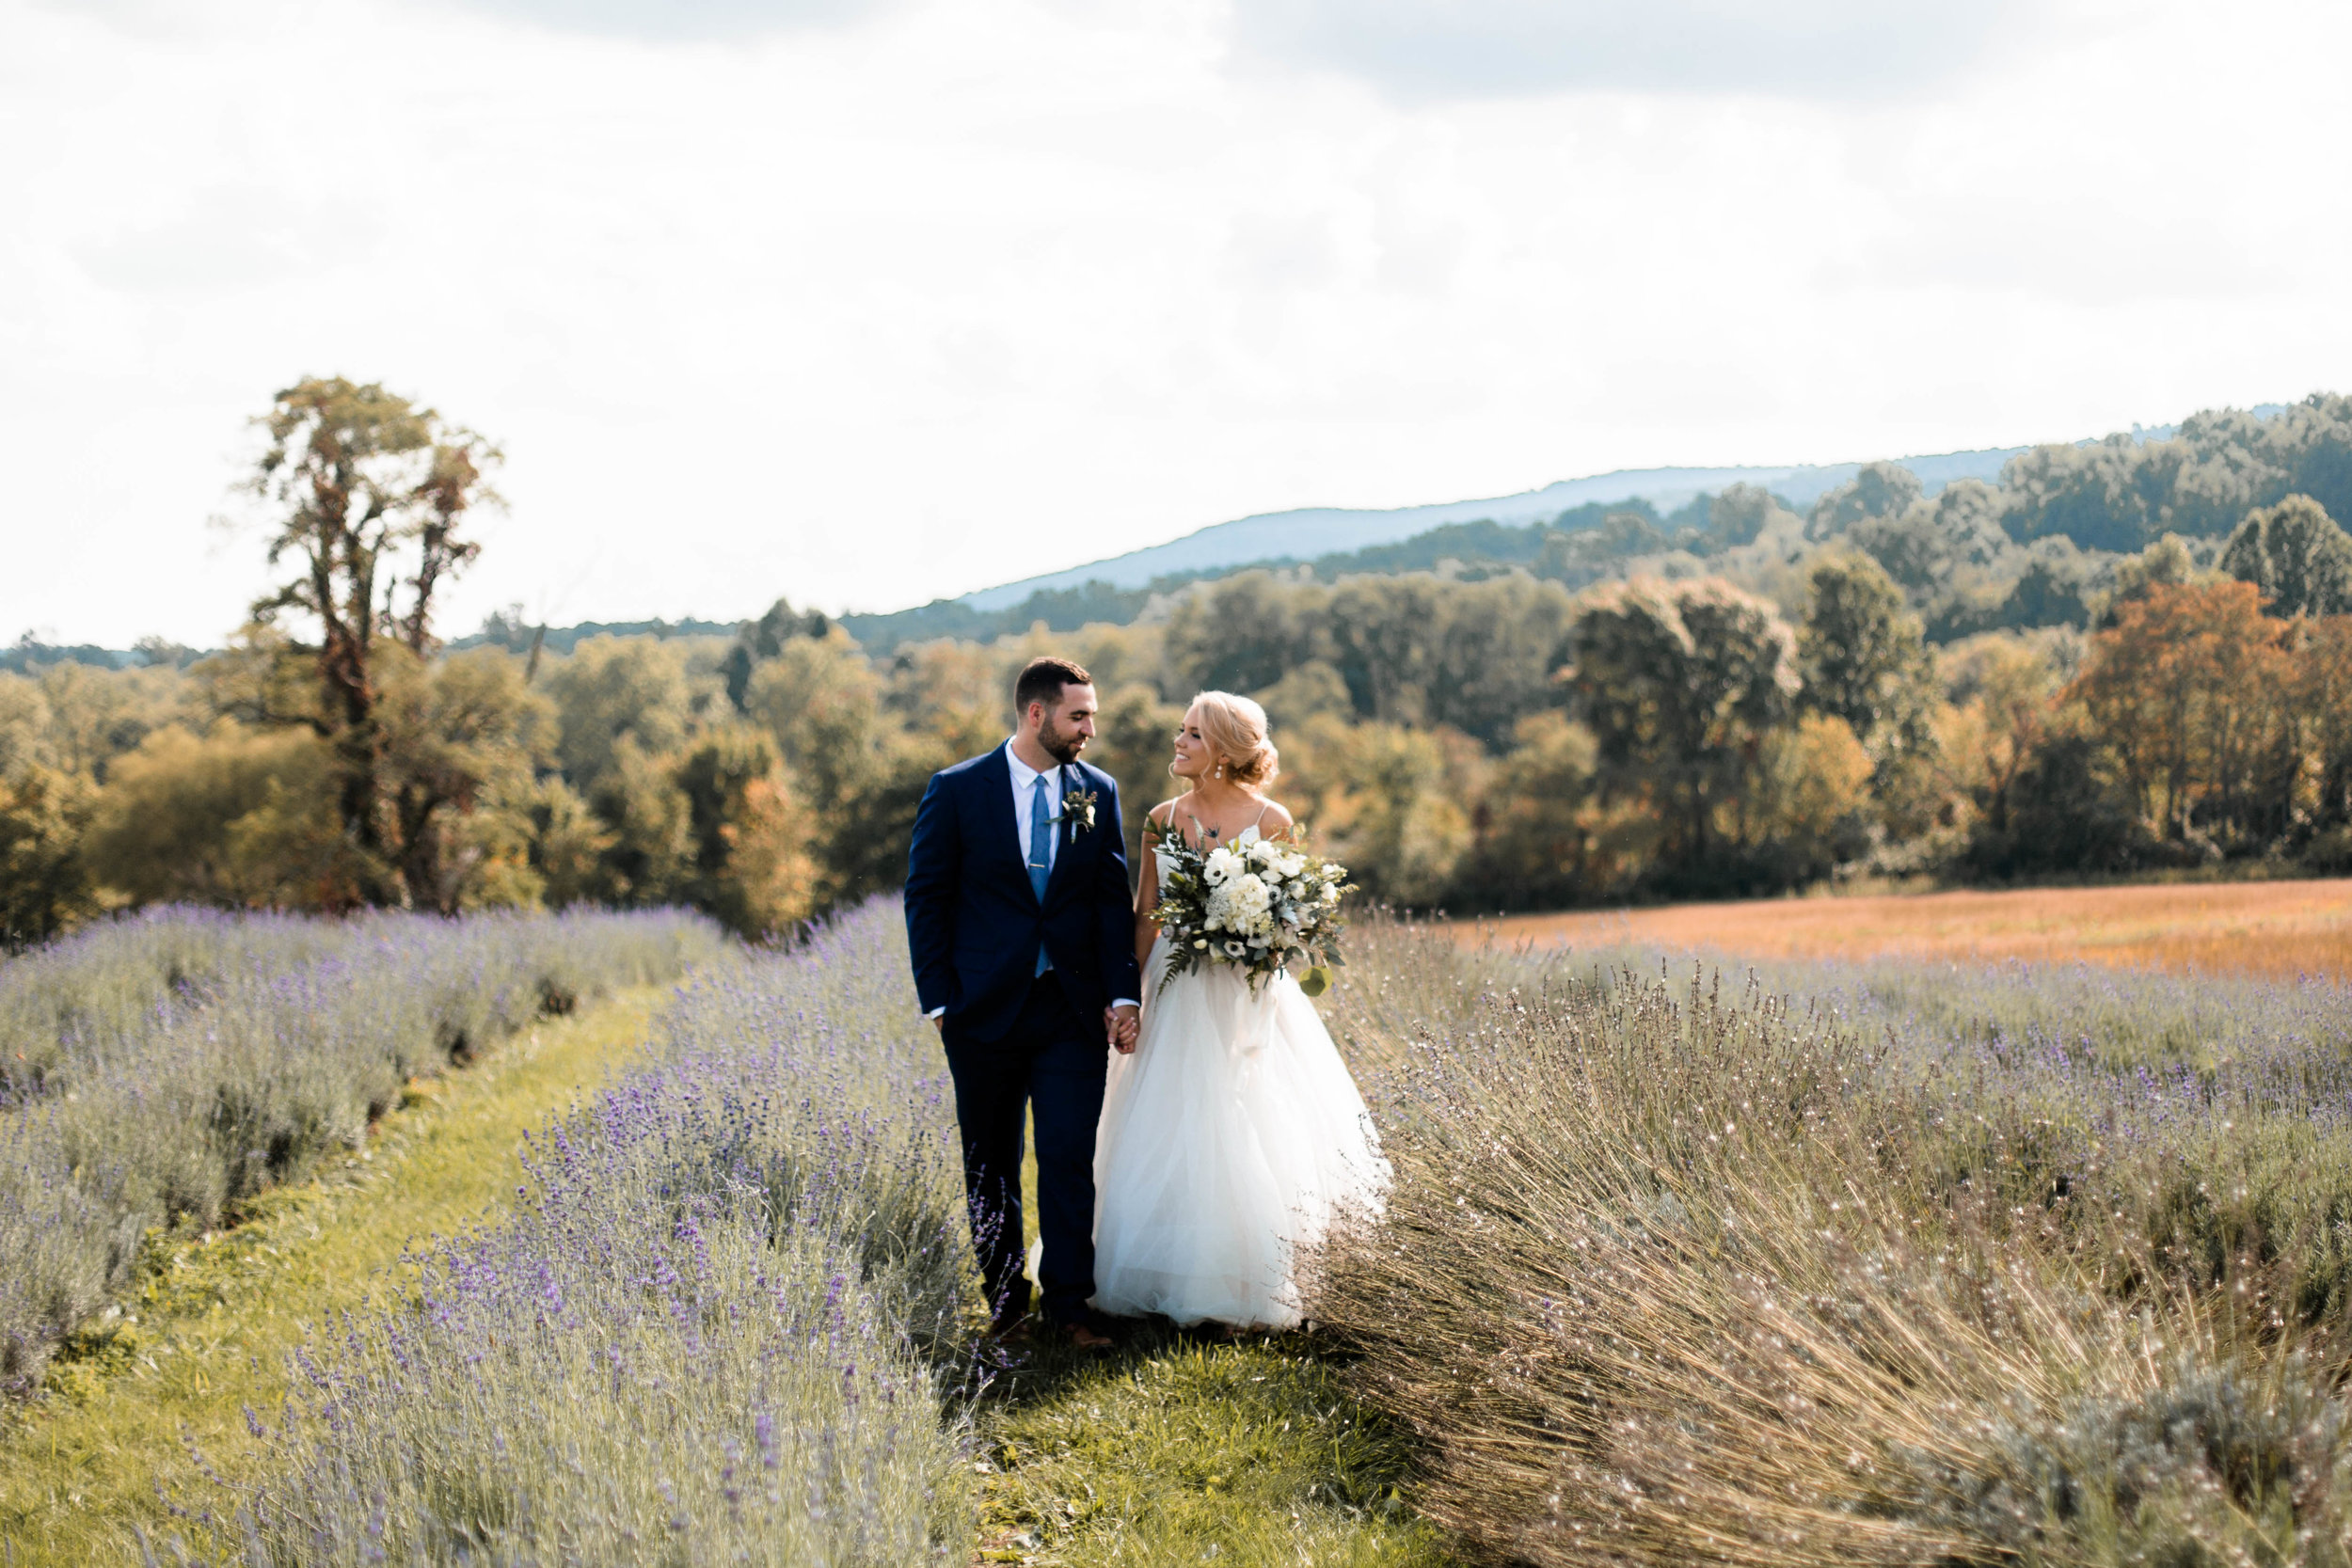 nicole-daacke-photography-intimate-wedding-in-a-lavender-field-washington-state-wedding-photographer-intimate-elopement-golden-lavender-field-wedding-photos-33.jpg